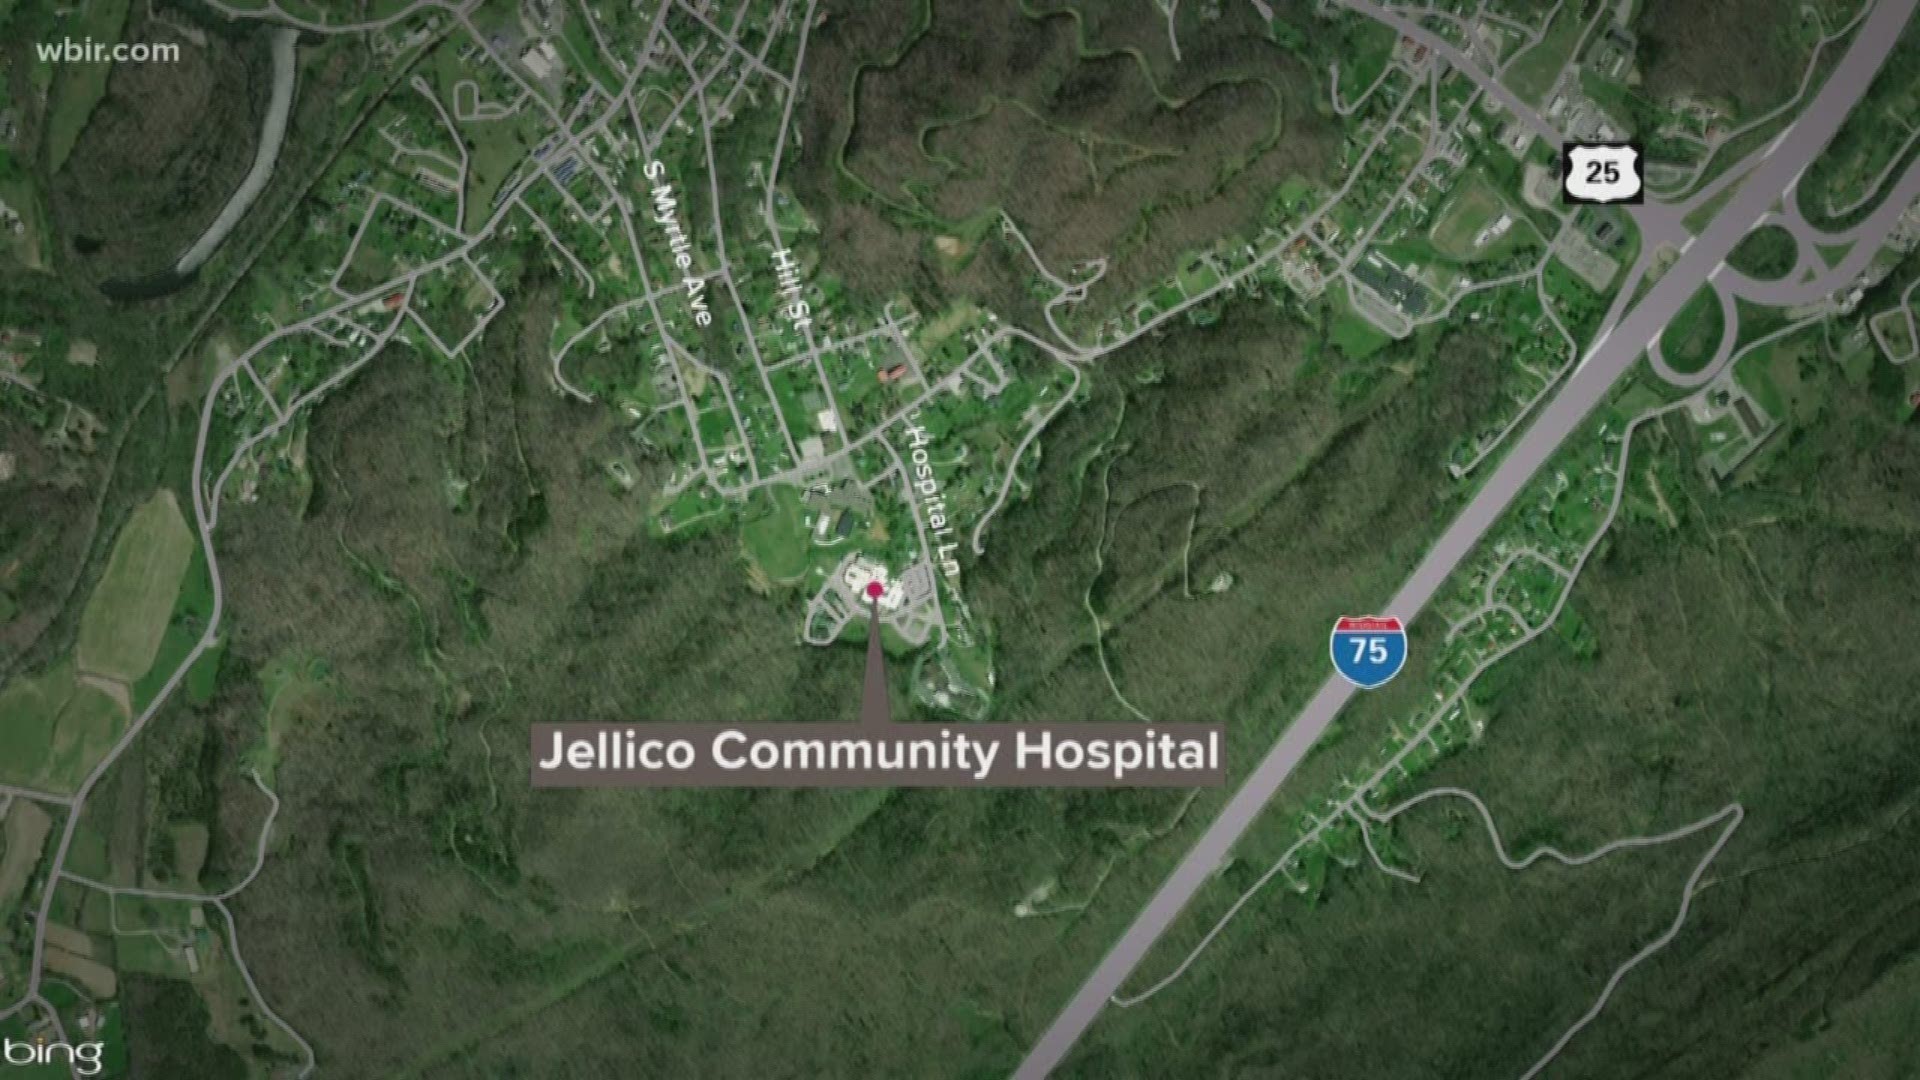 Rennova Health Company says it is buying Jellico Community Hospital